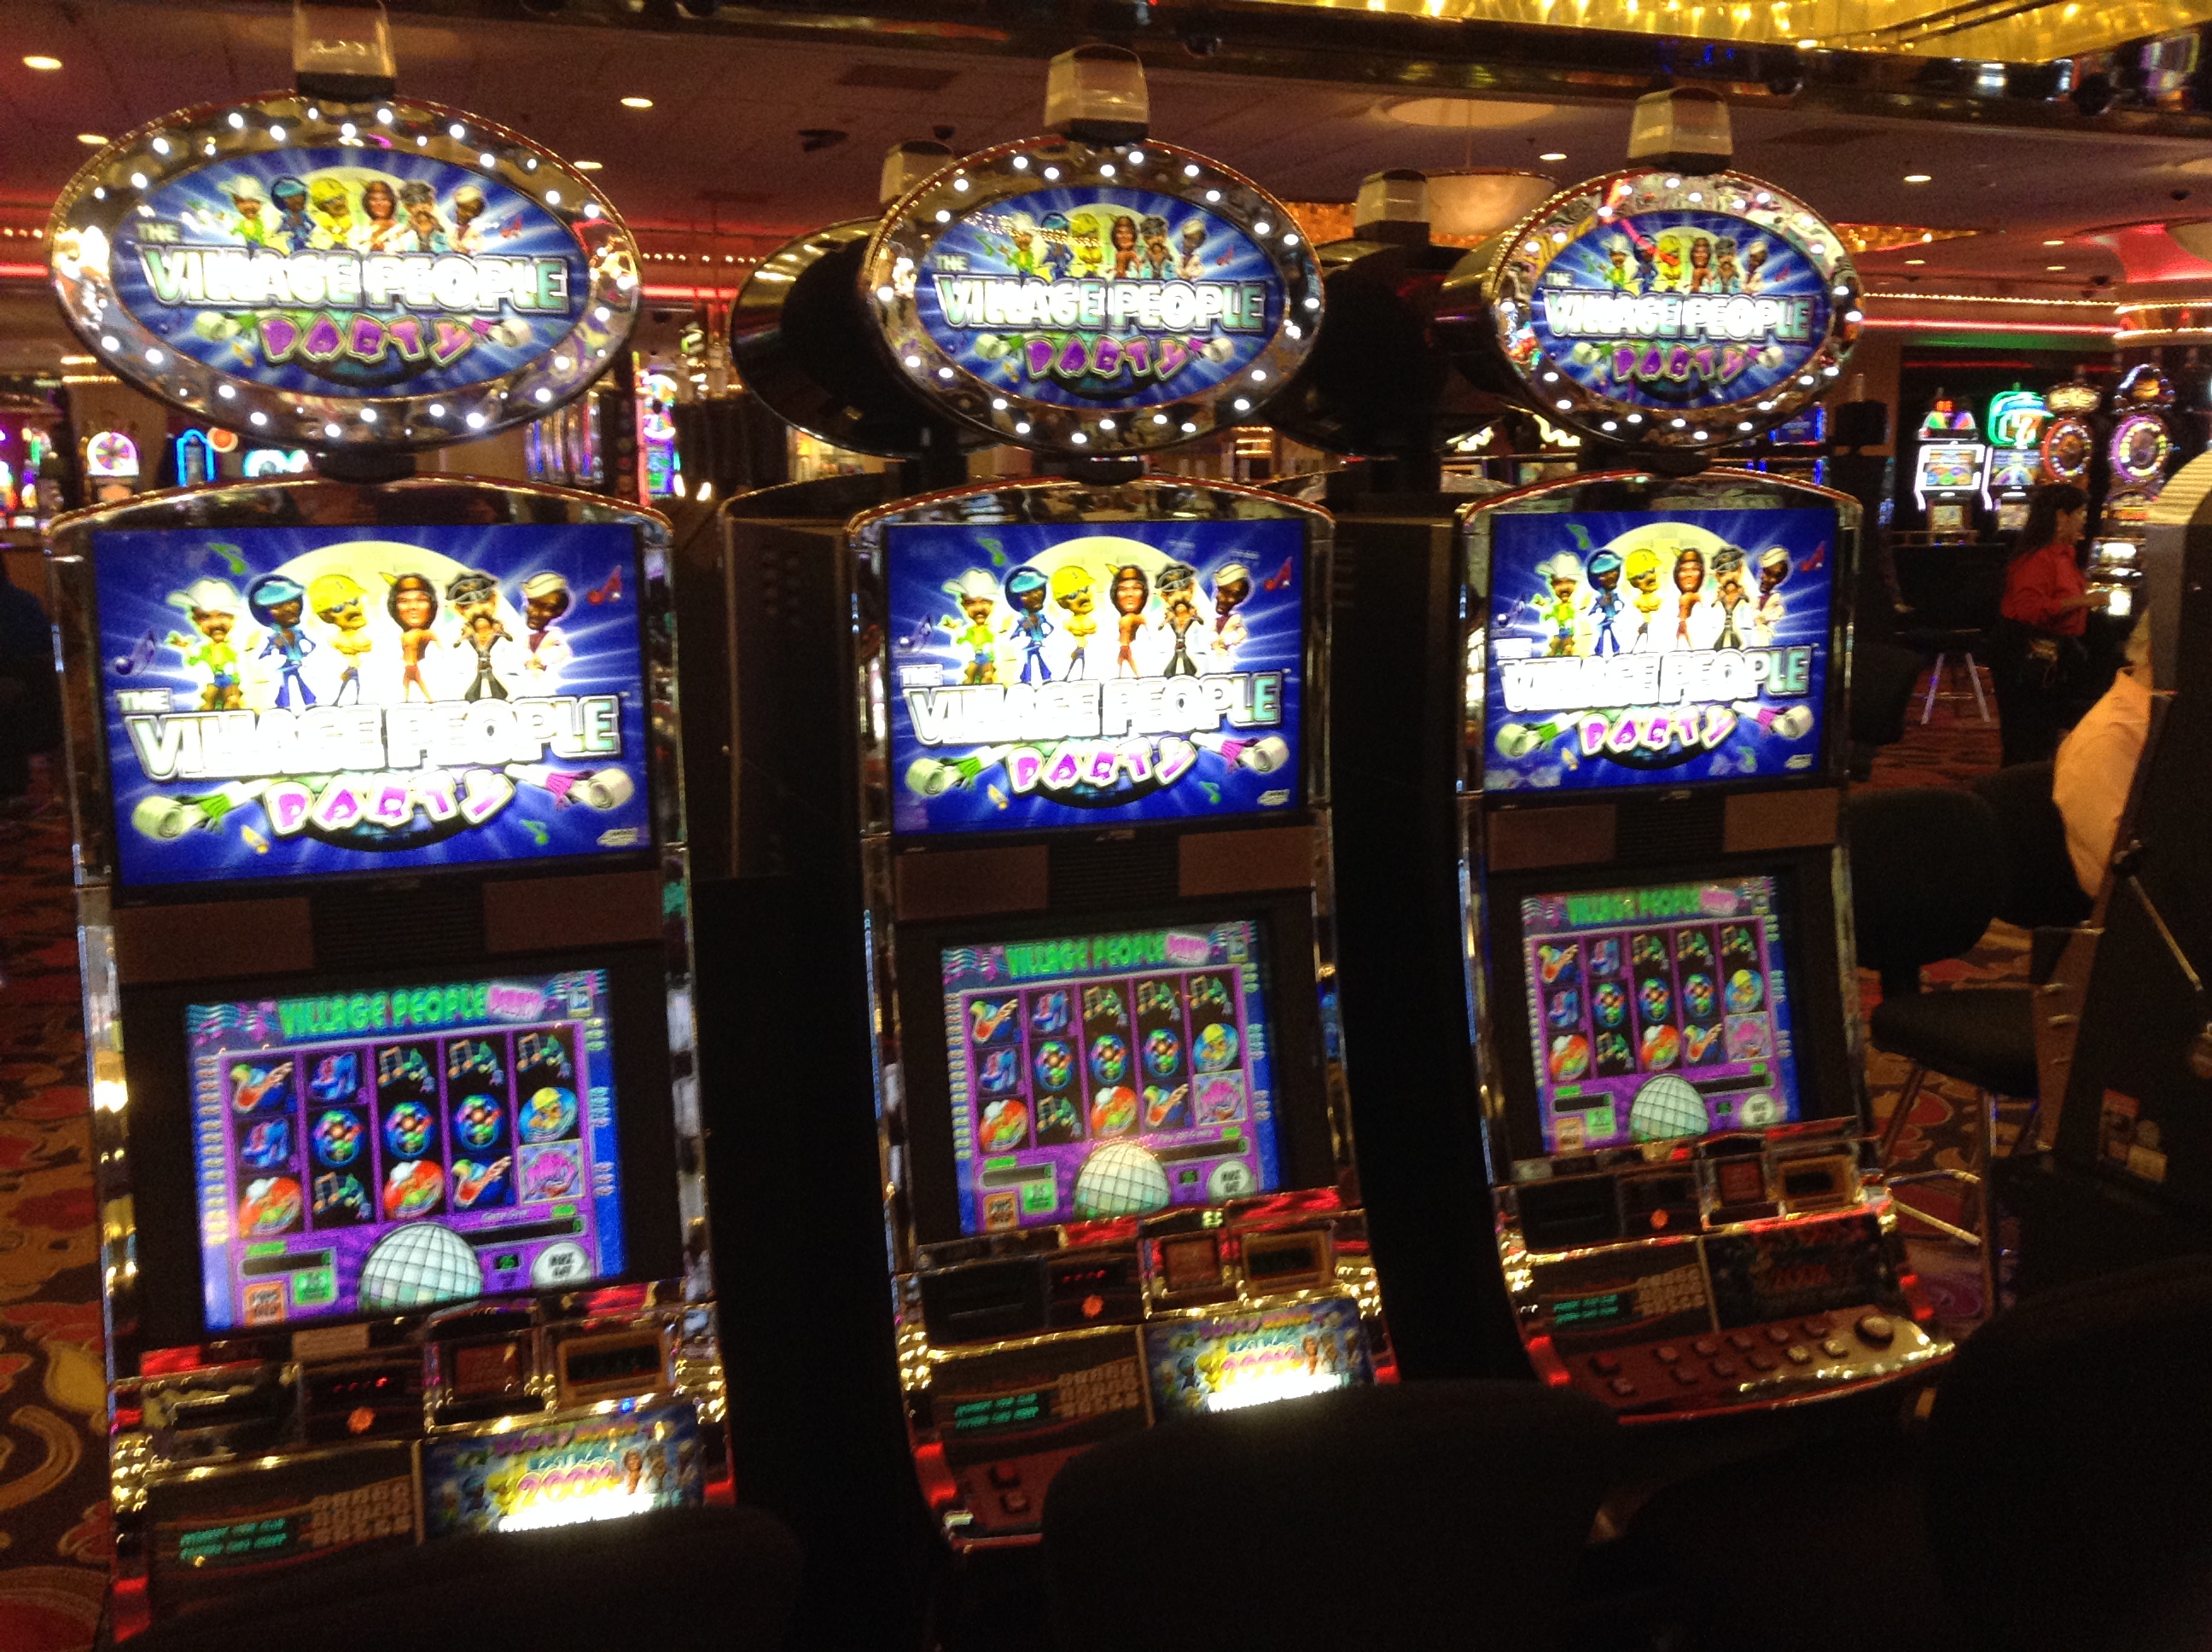 las vegas casinoes wth alien slot machines